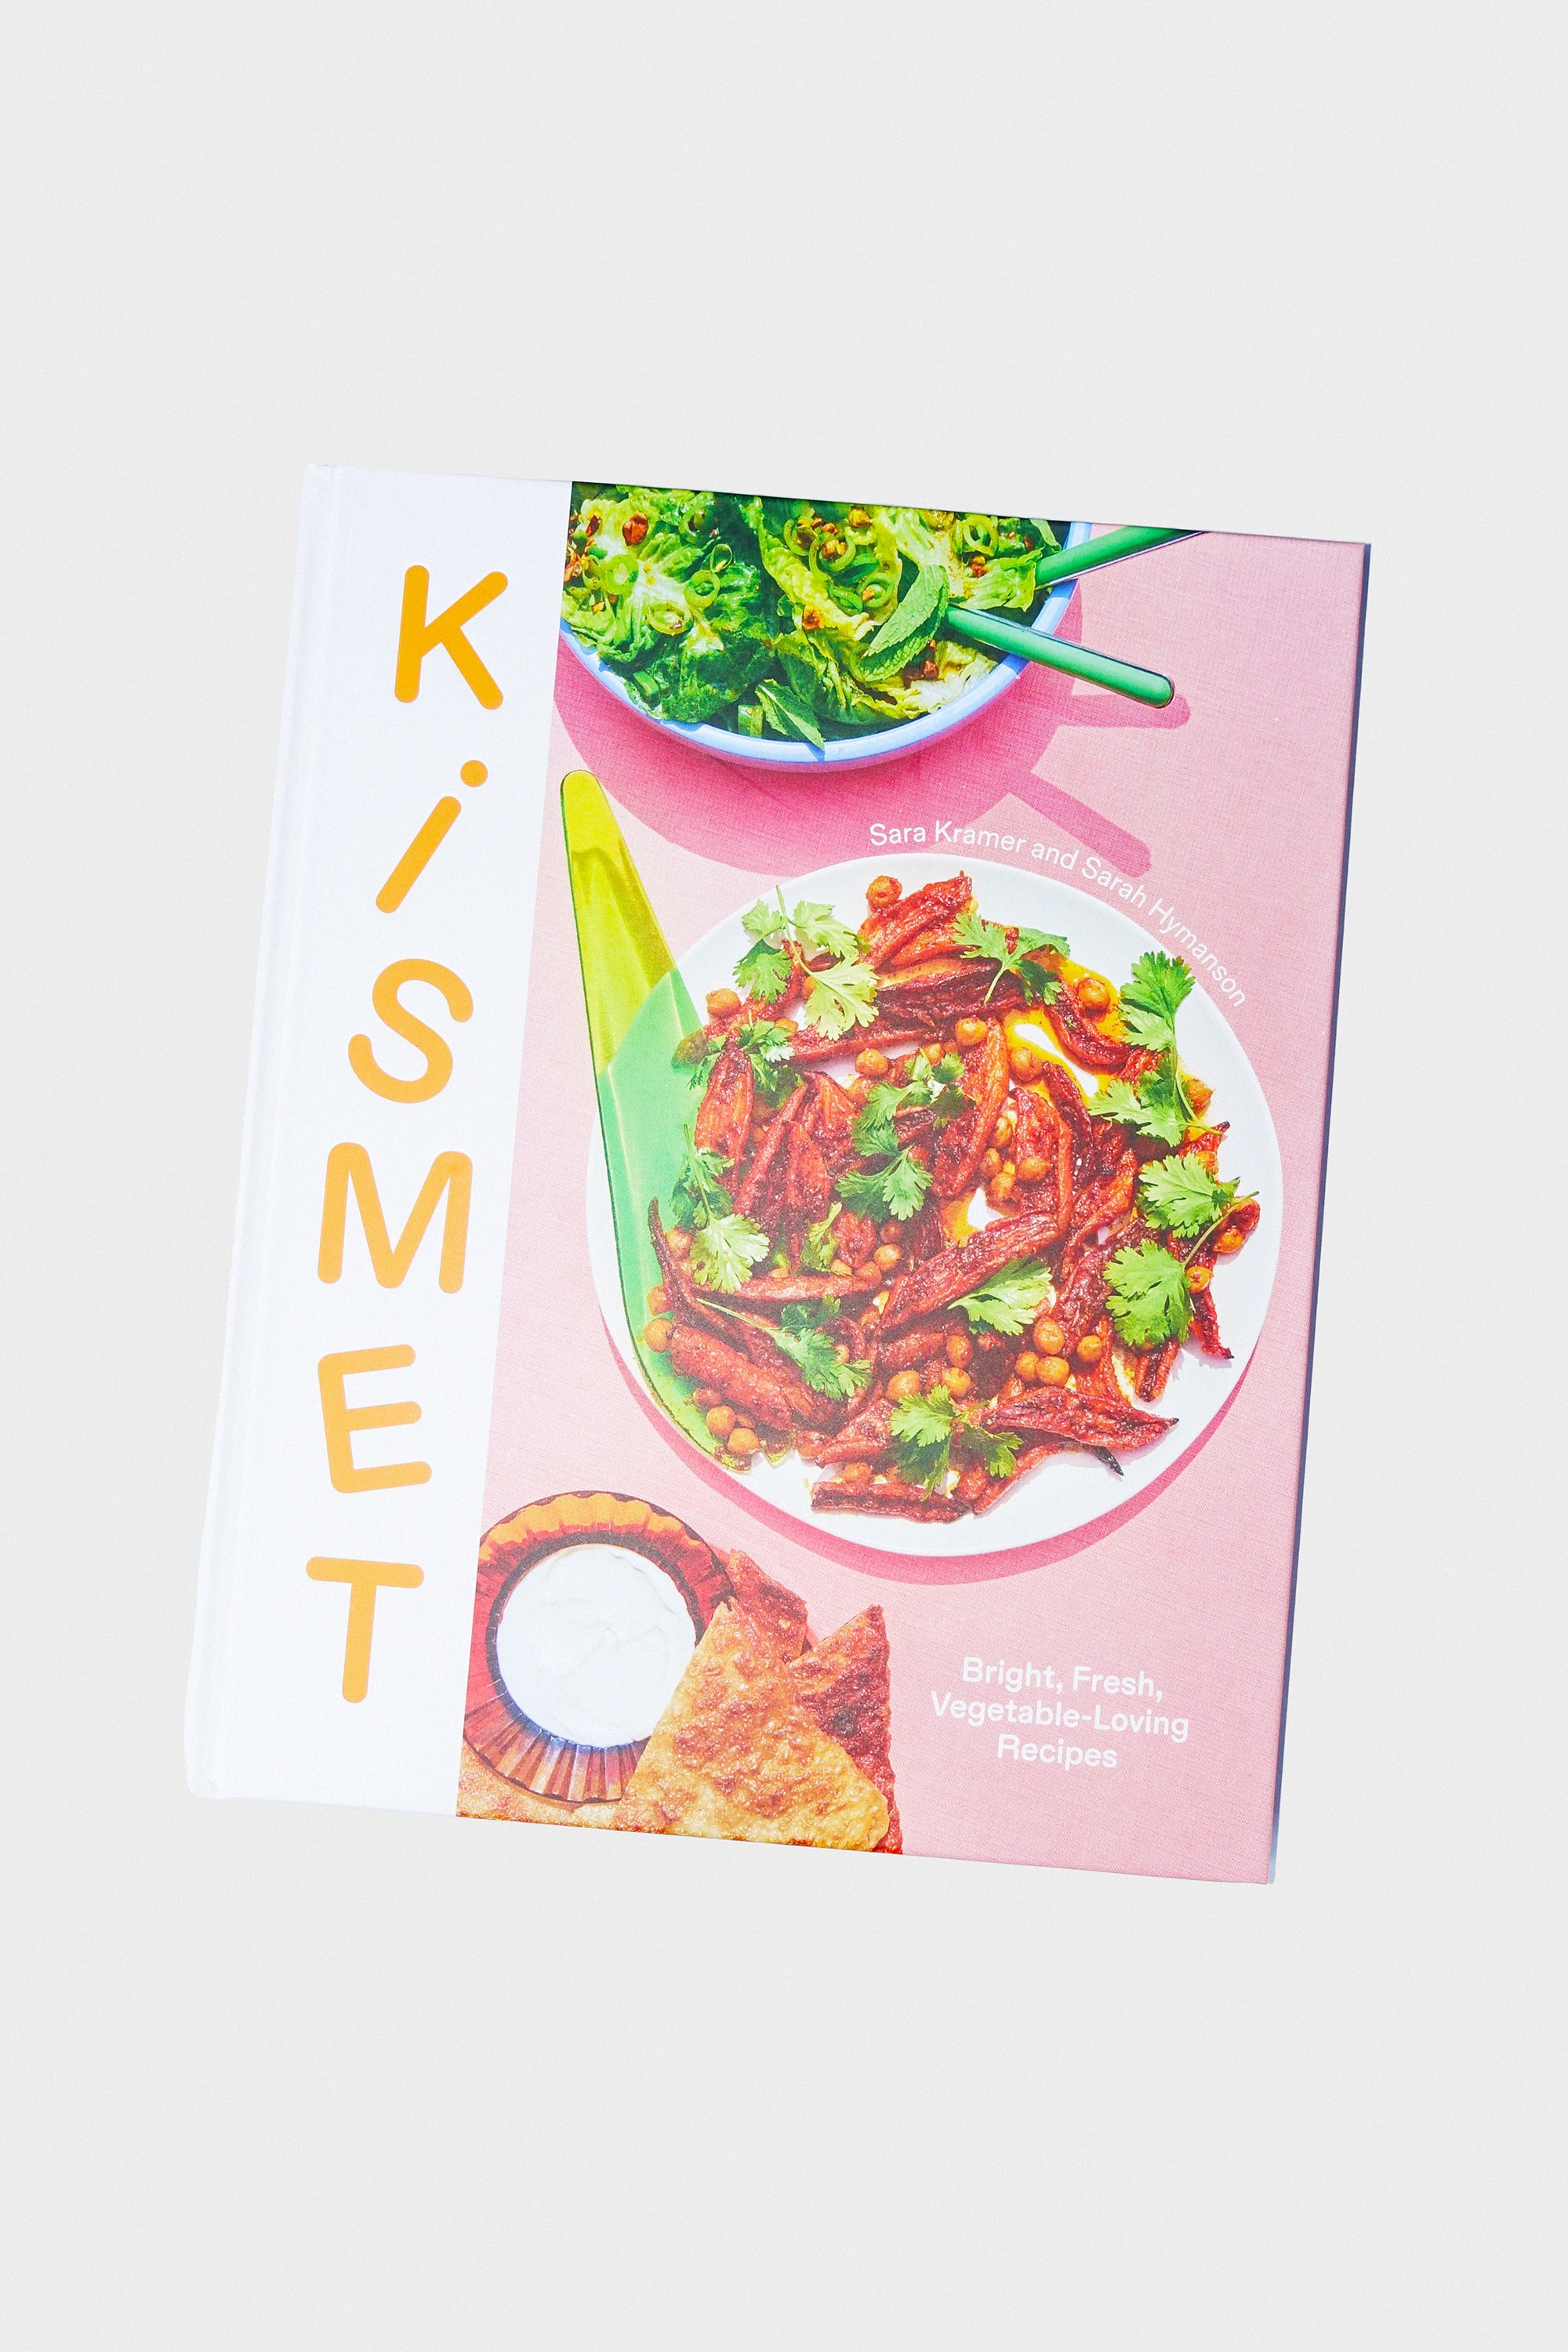 Kismet: Bright, Fresh, Vegetable-Loving Recipes